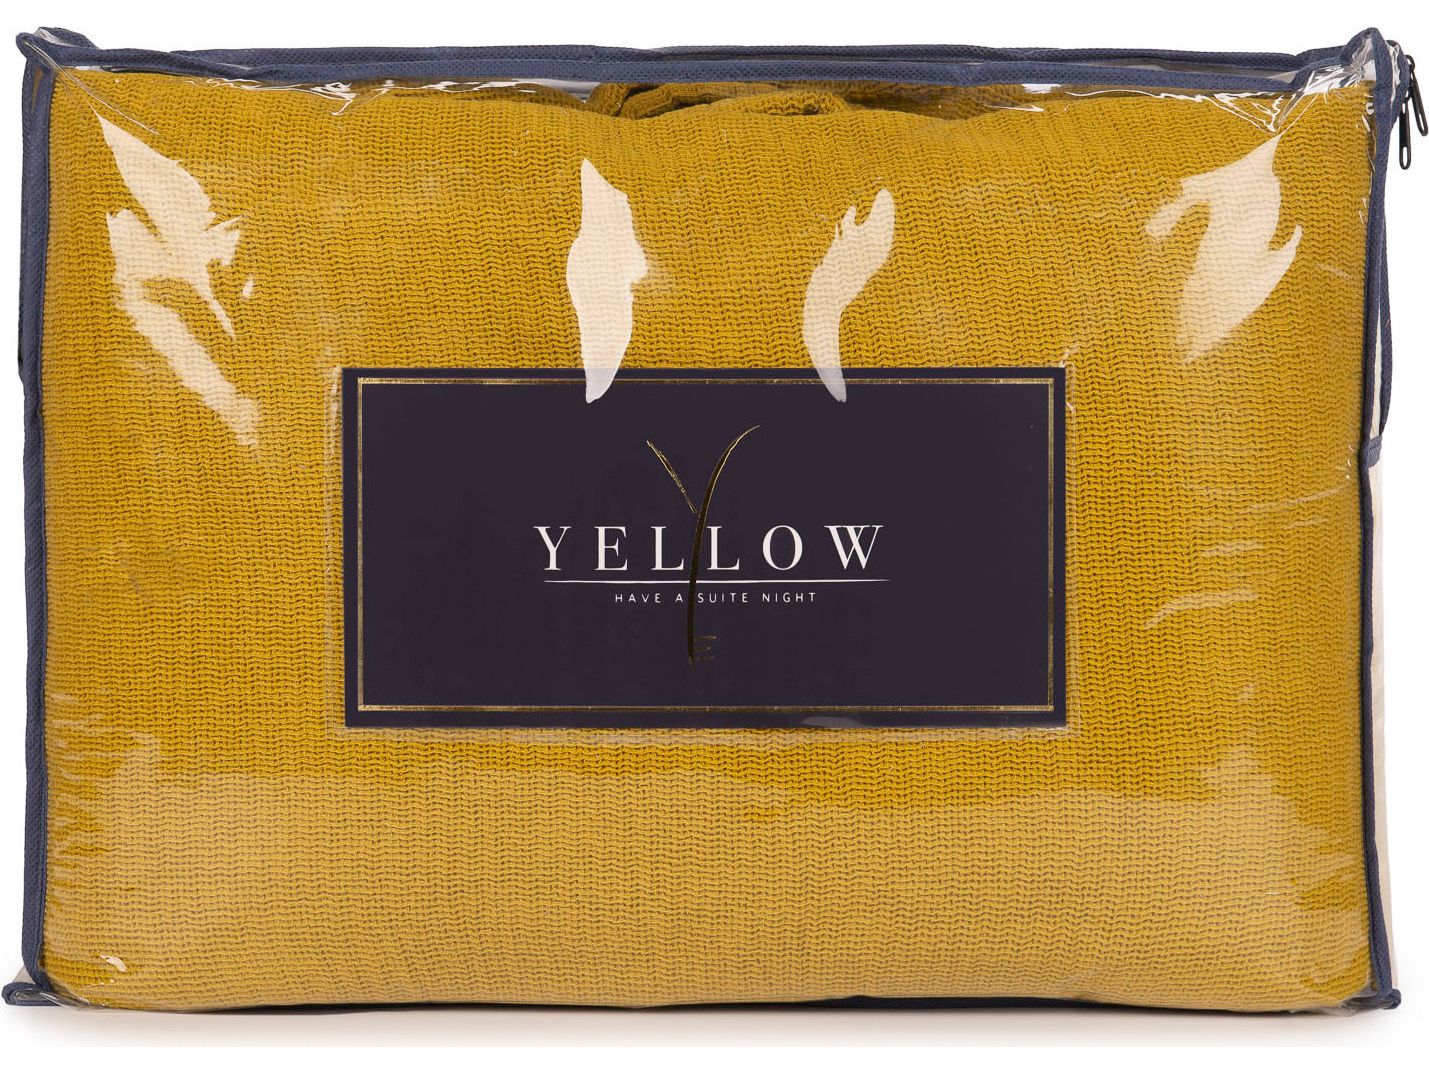 heckett-lane-yellow-bedsprei-ica-180-x-260-cm